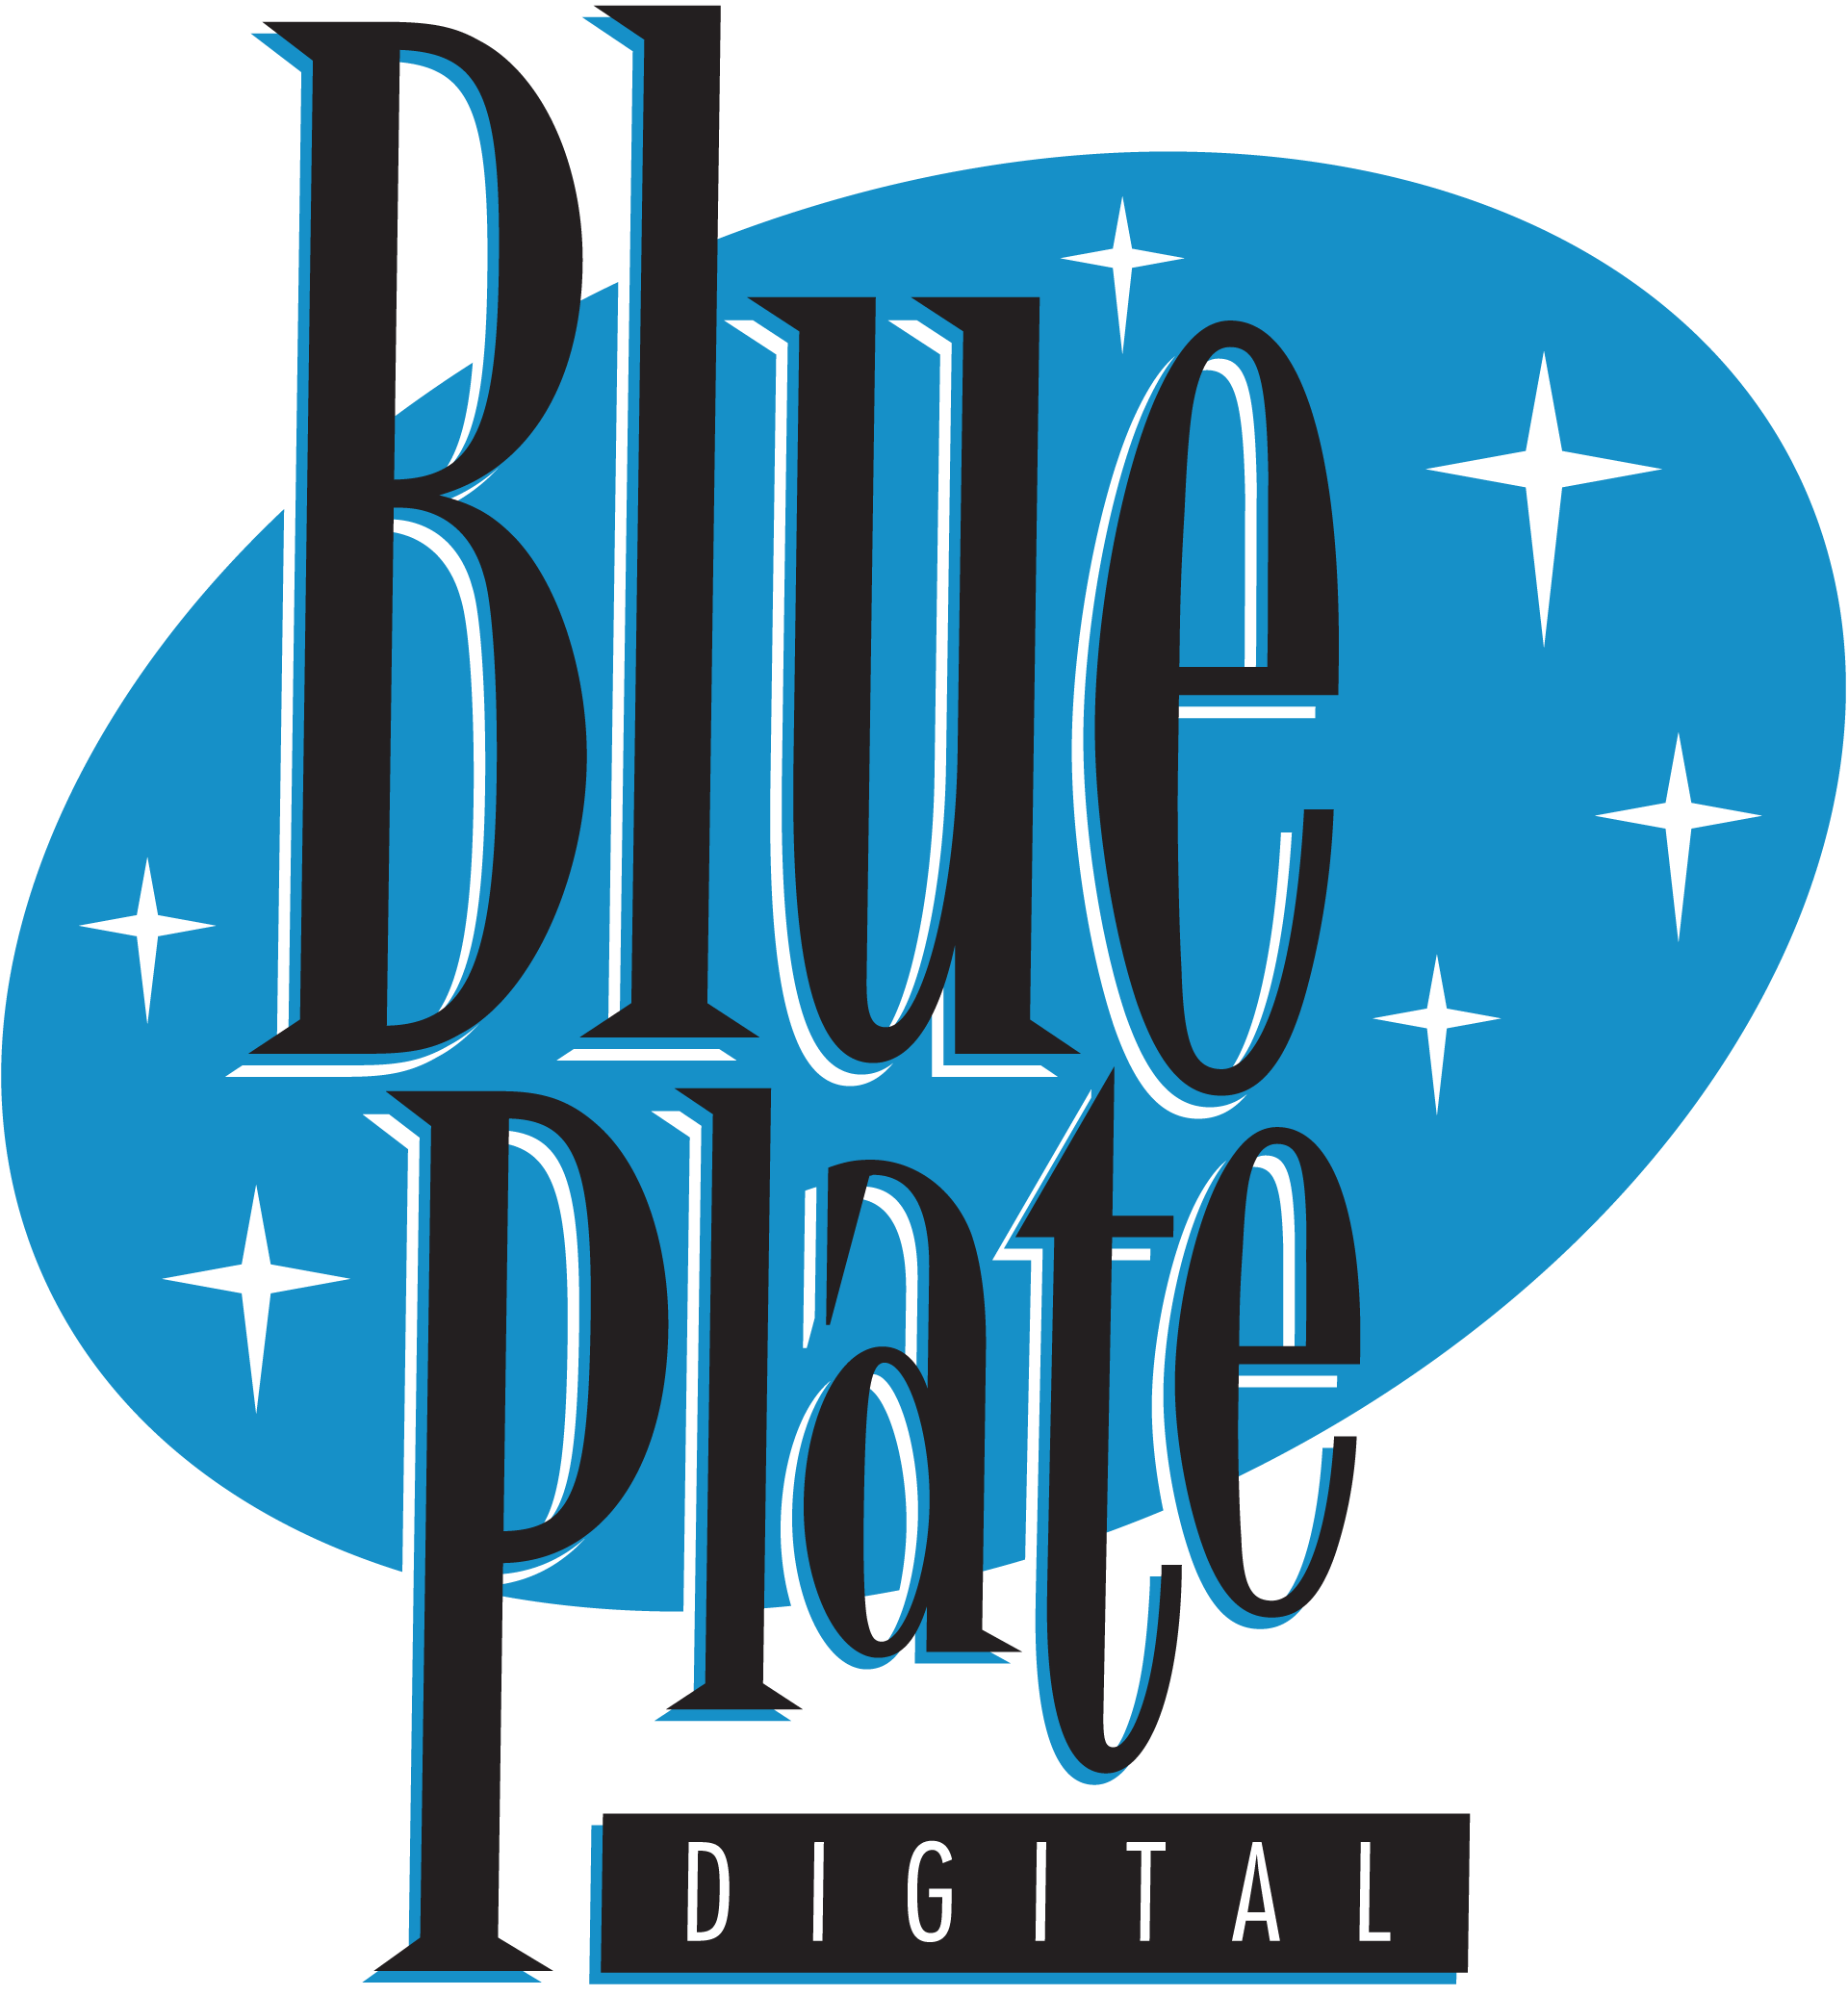 Blue Plate Digital